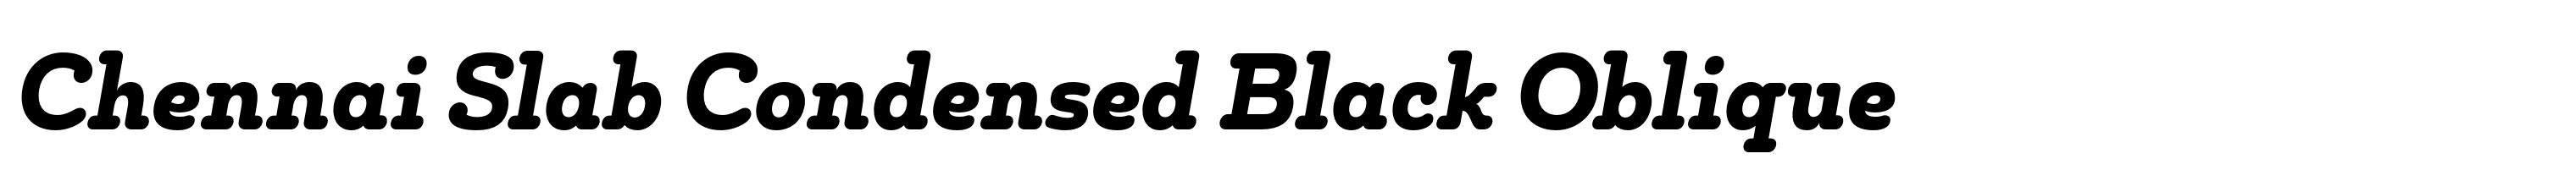 Chennai Slab Condensed Black Oblique